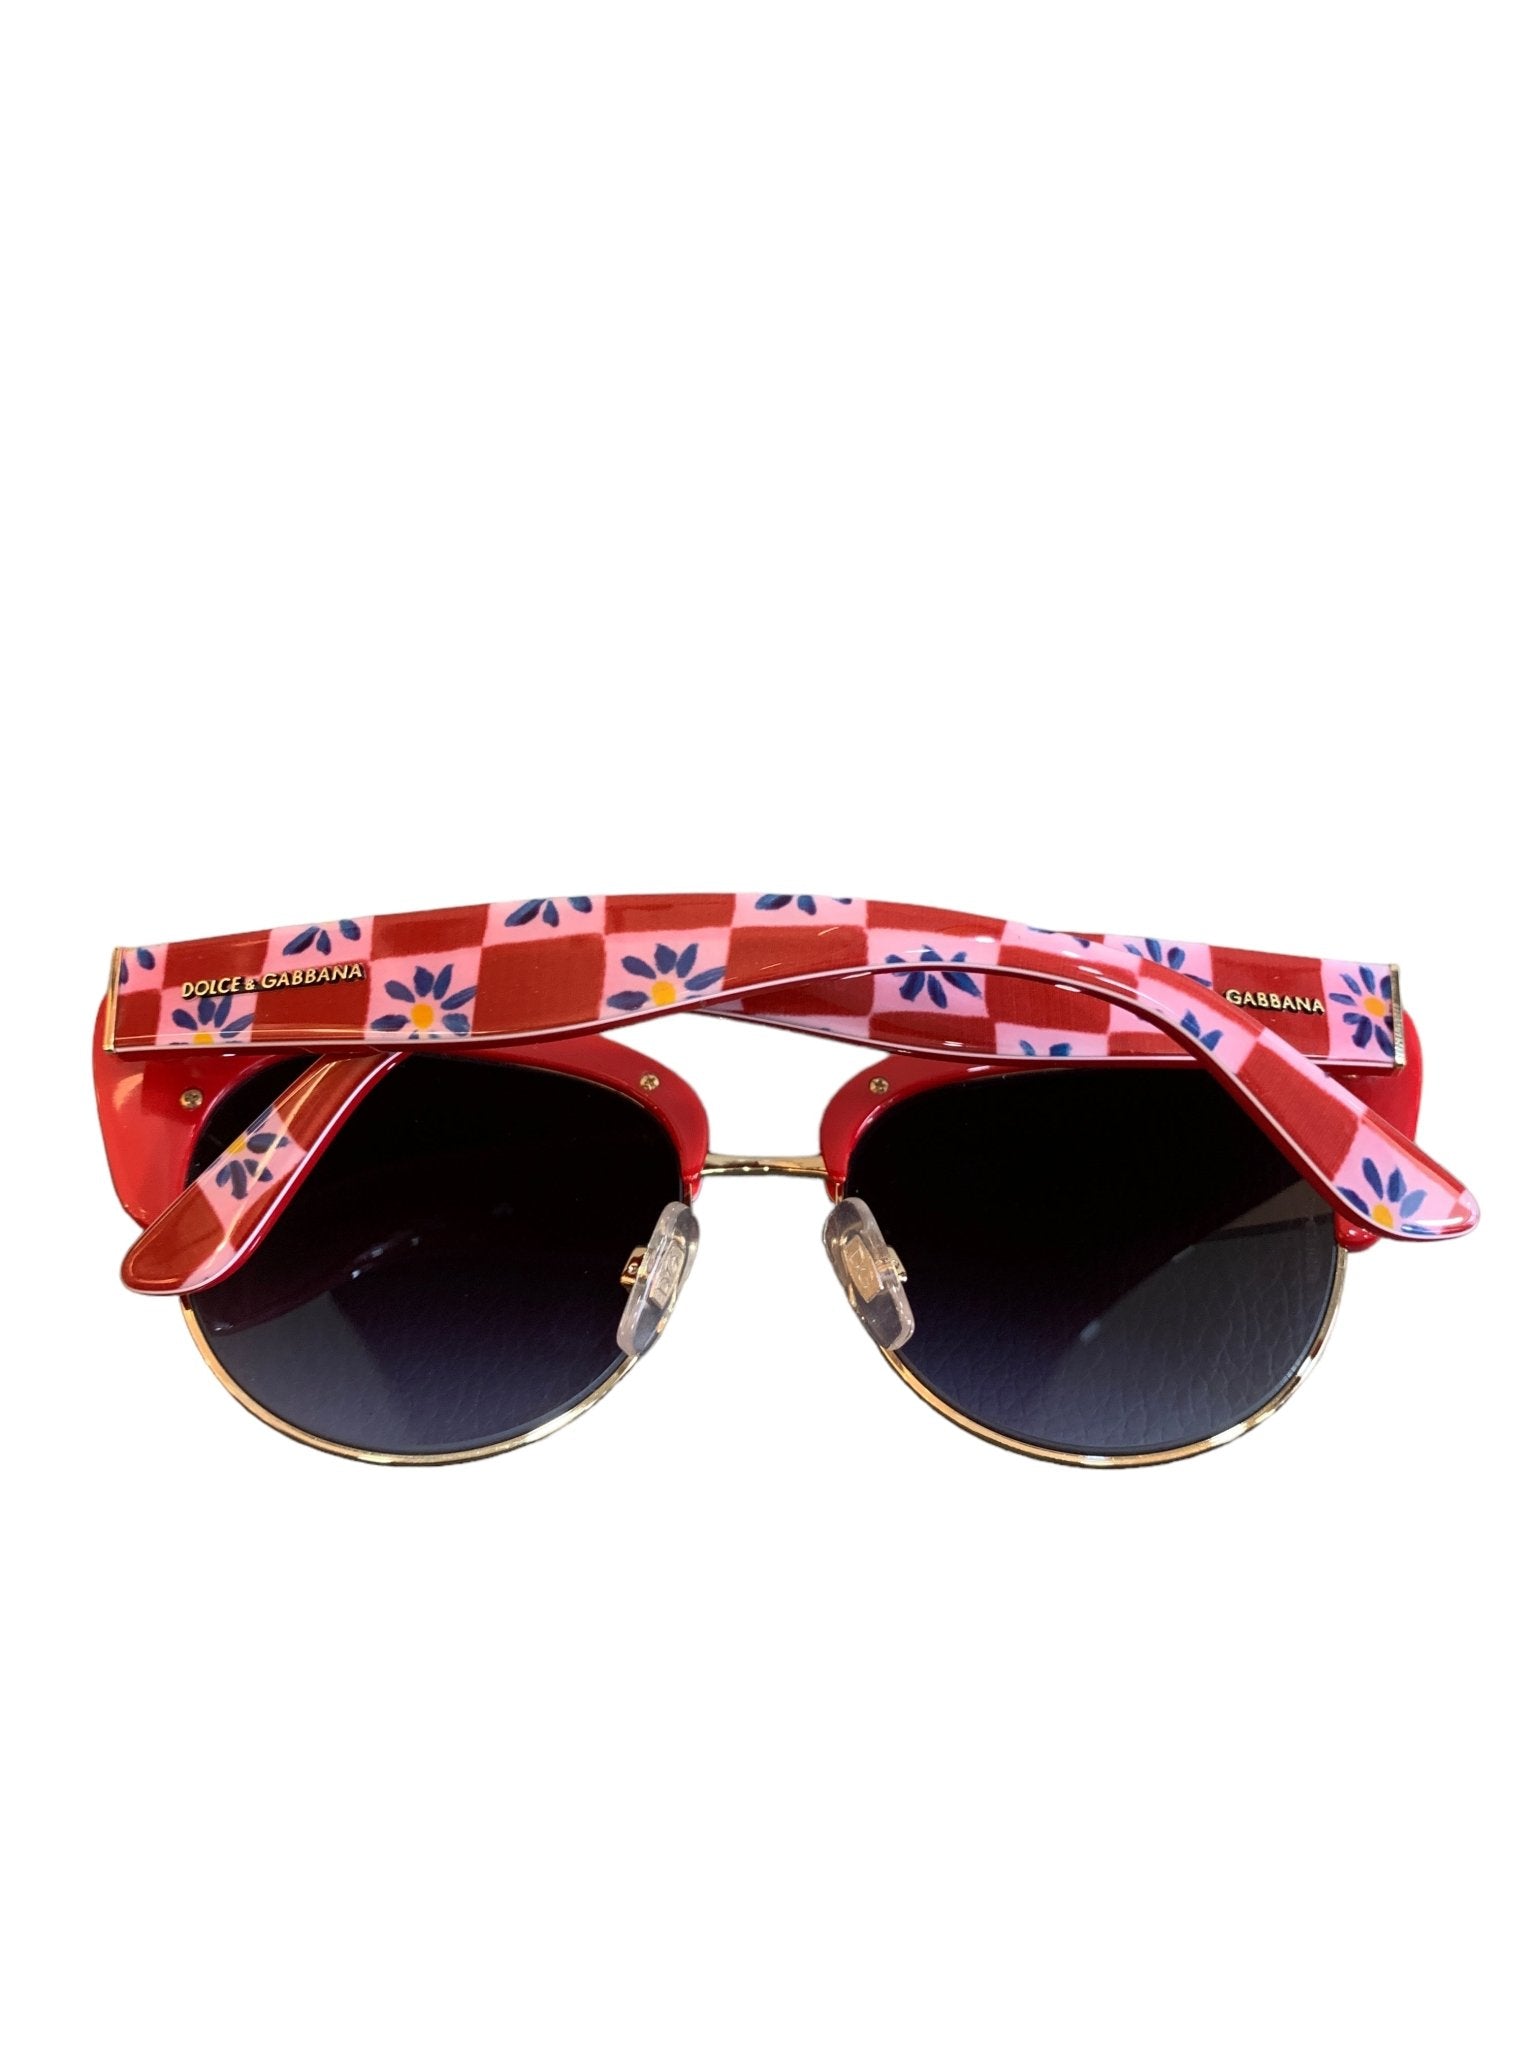 Dolce & Gabbana DG4277 occhiali da sole - AgeVintage